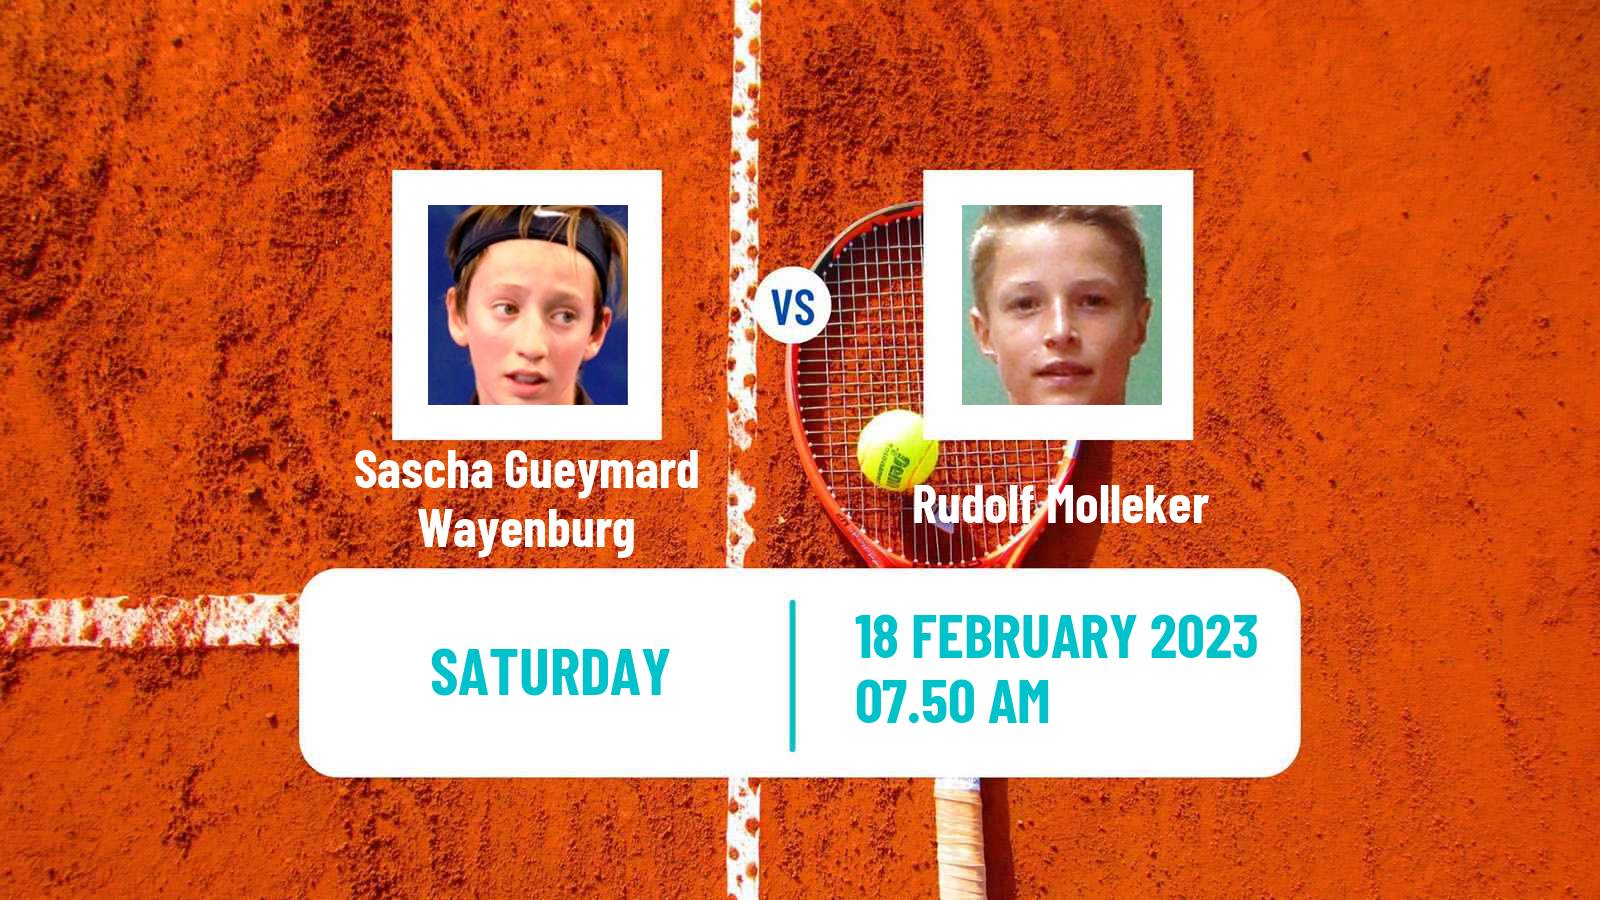 Tennis ITF Tournaments Sascha Gueymard Wayenburg - Rudolf Molleker